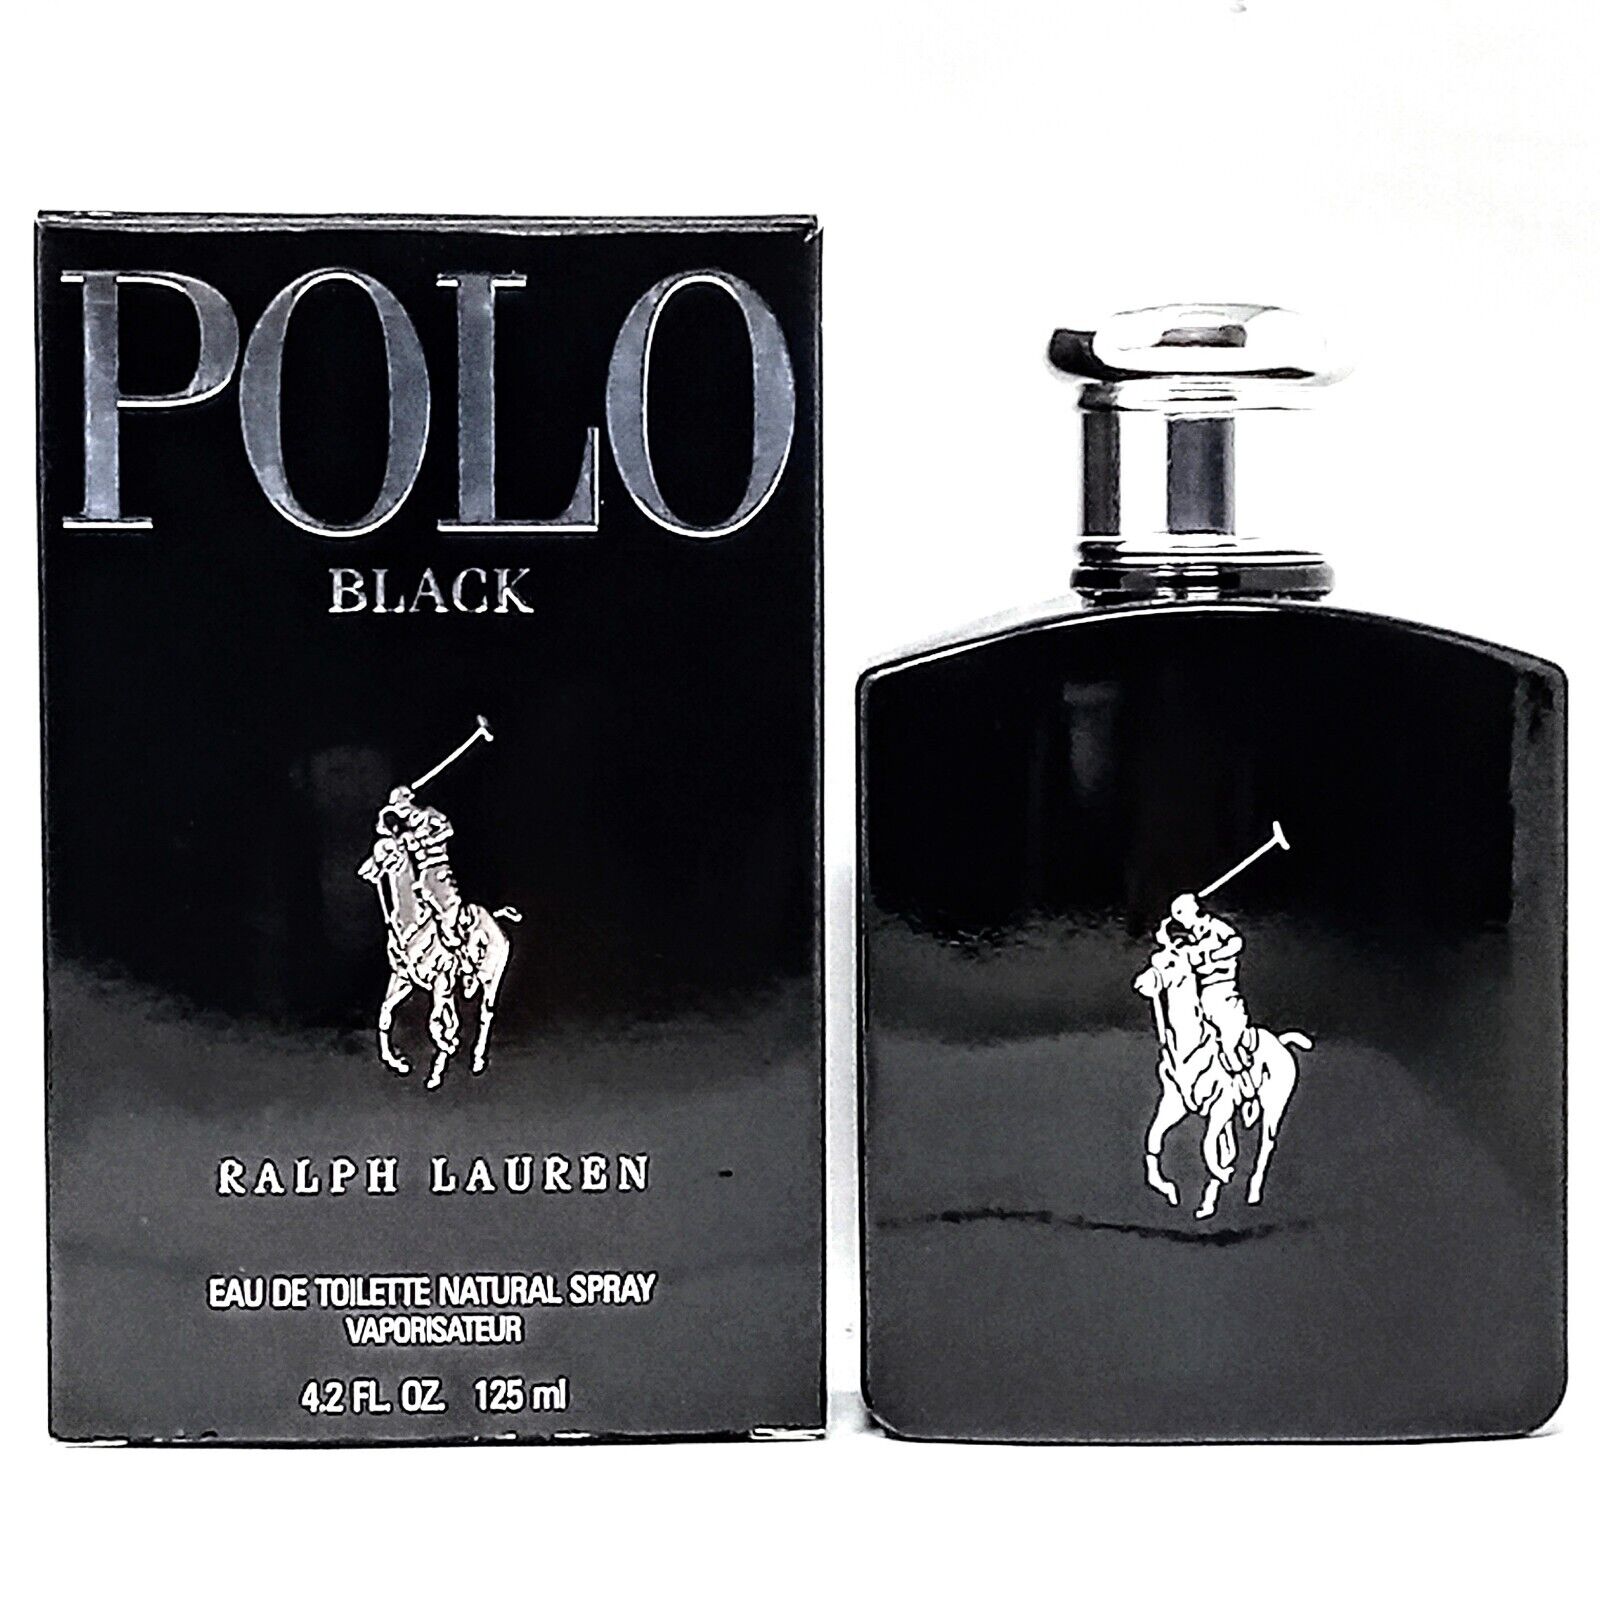 Polo Black by Ralph Lauren 4.2 Oz / 125 Ml – Men\'s EDT, Original Sealed Box